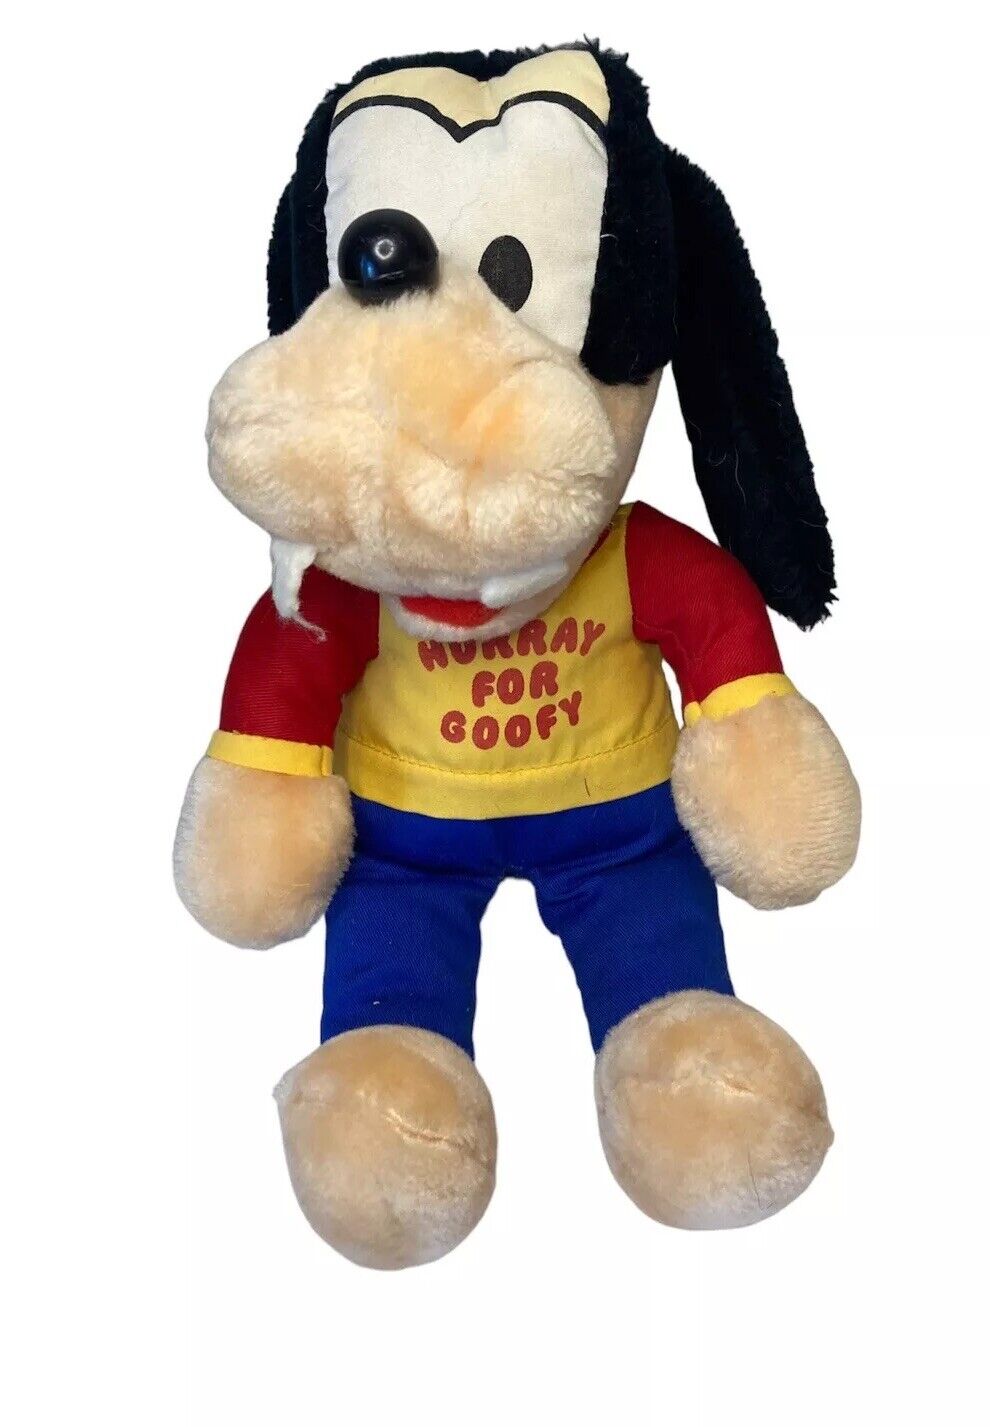 Vintage Hurray For Goofy Plush Stuffed Animal Walt Disney Knickerbocker